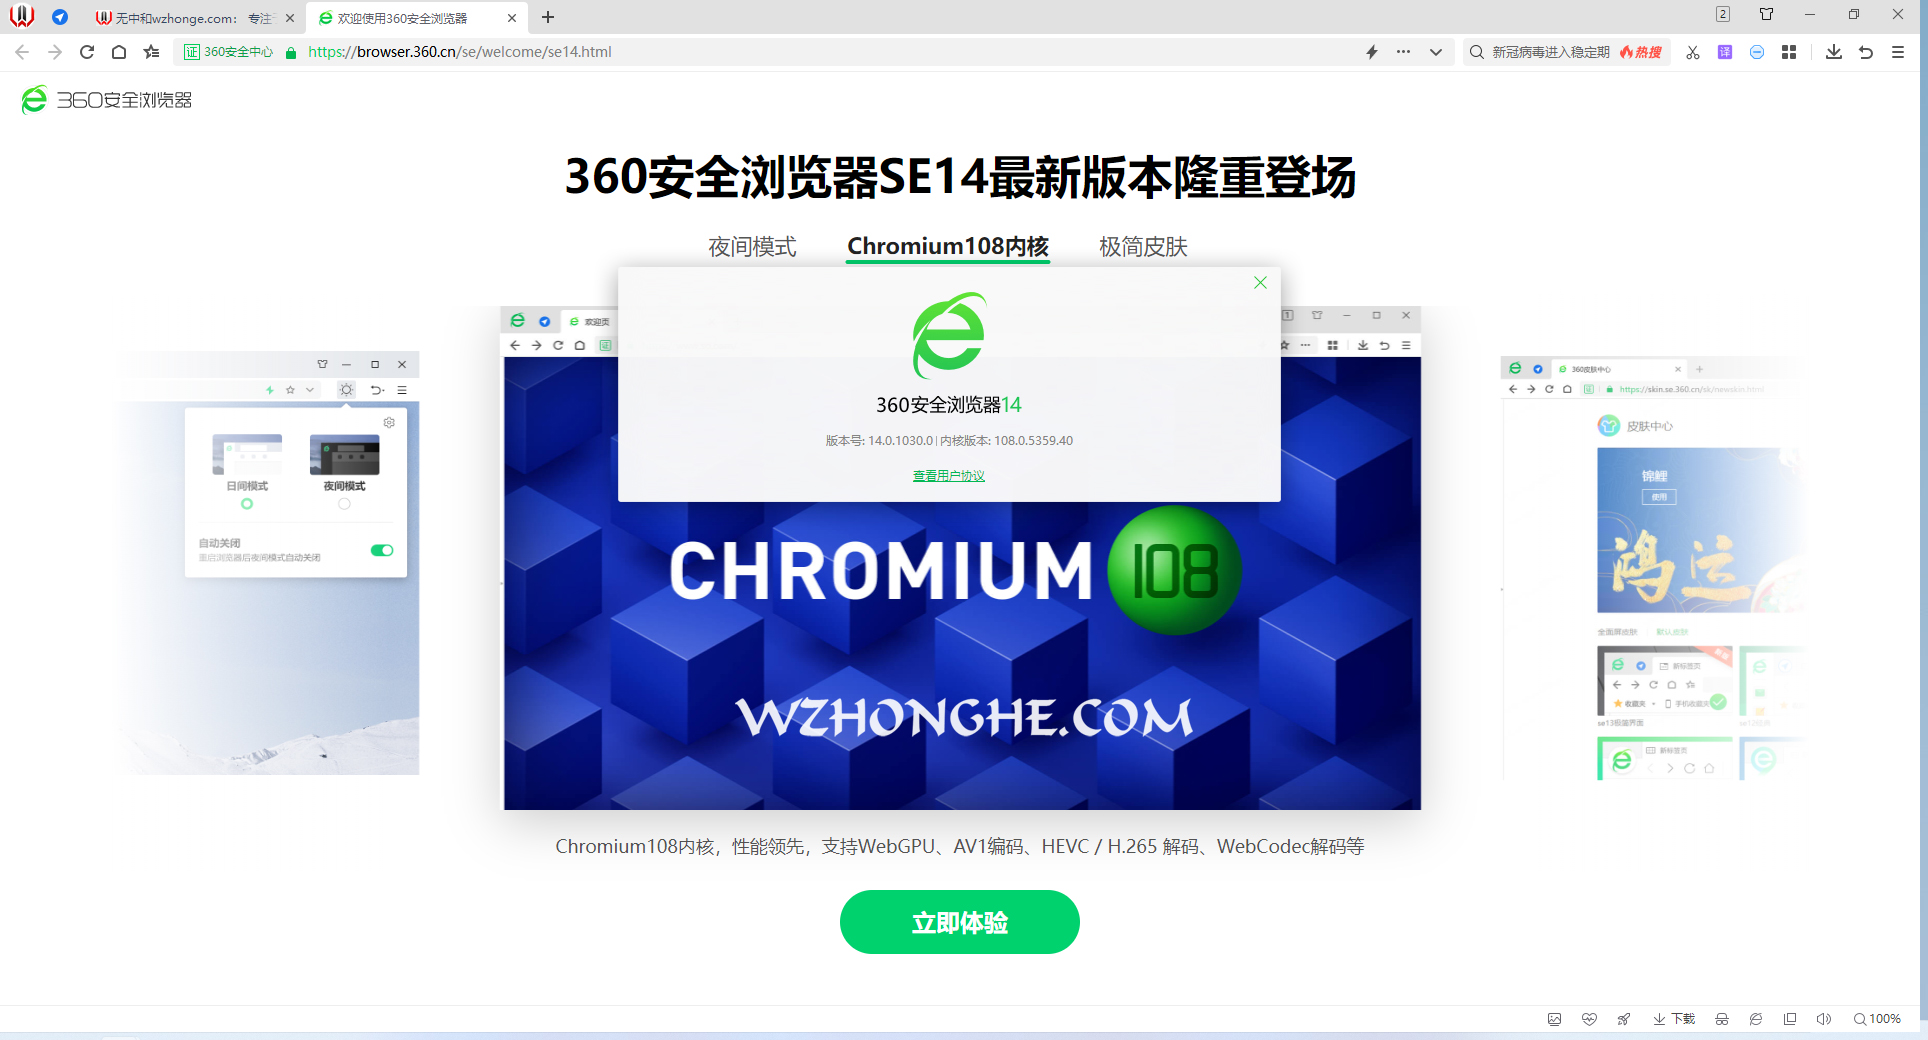 360安全浏览器 v14 - 无中和wzhonghe.com -2